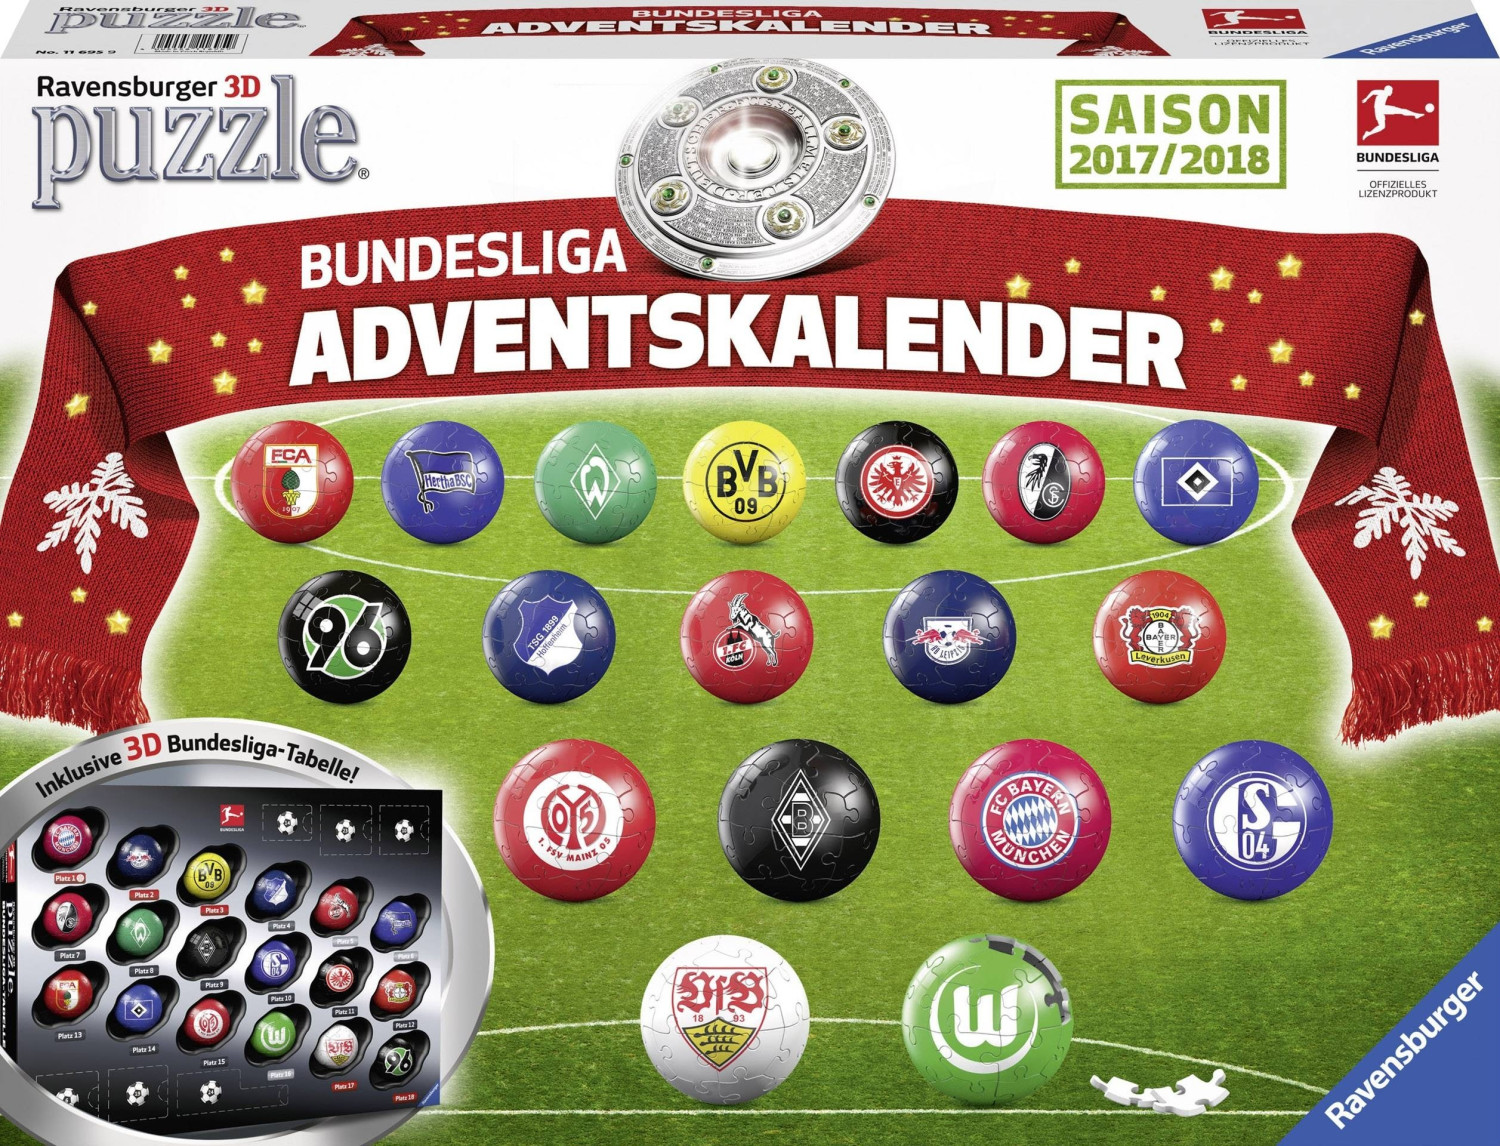 Ravensburger Adventskalender Bundesliga 2017